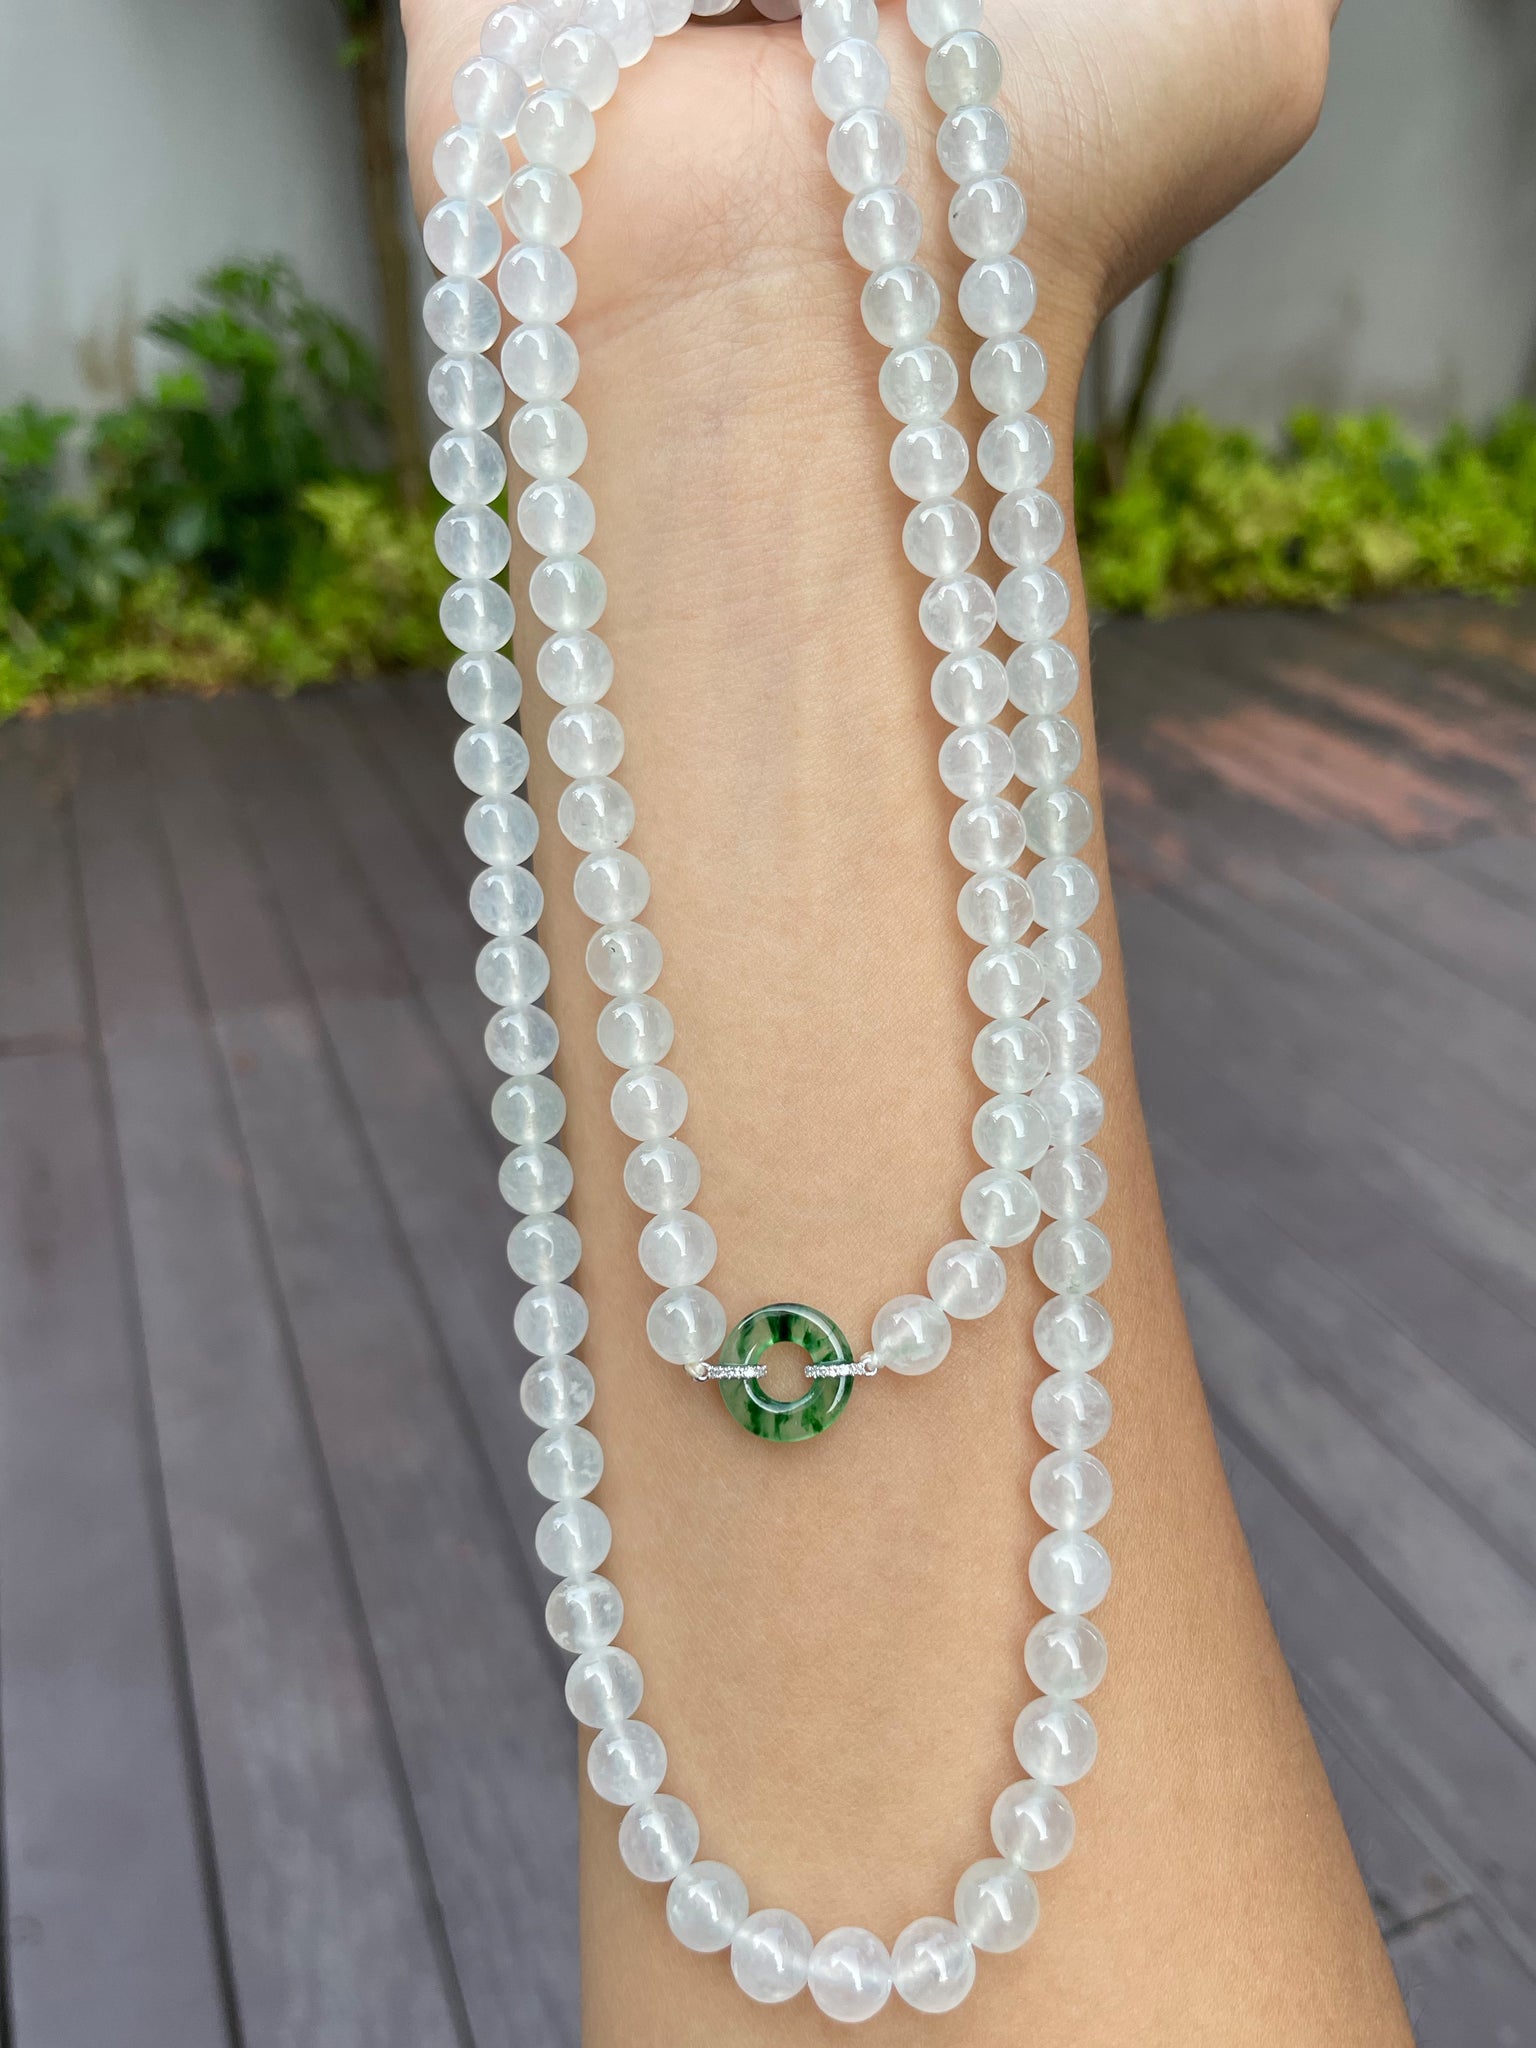 Handmade 12mm Green Natural Jade Jadeite Gemstone Bead Beads Necklace 18''  AAA | eBay